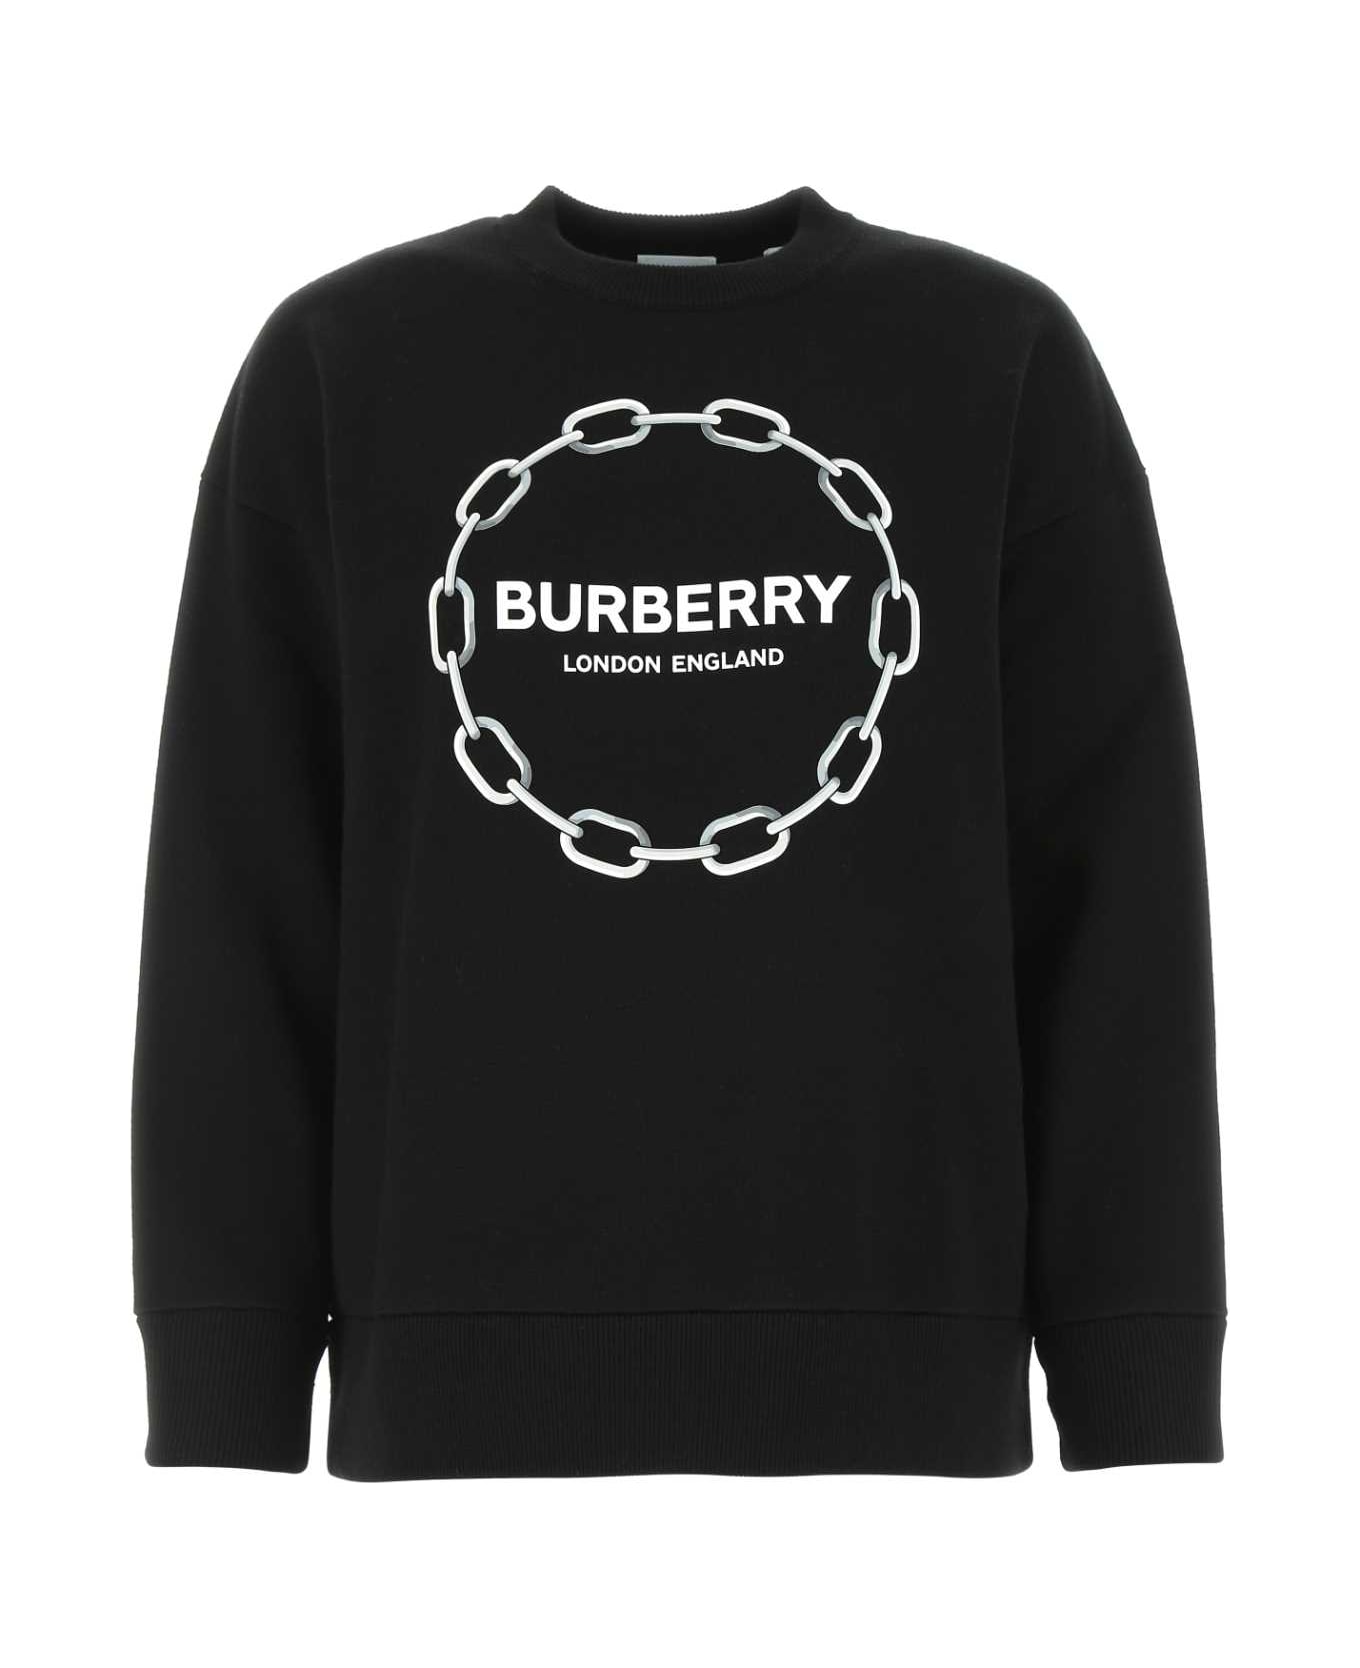 Burberry Black Stretch Wool Blend Sweater - A1189 フリース